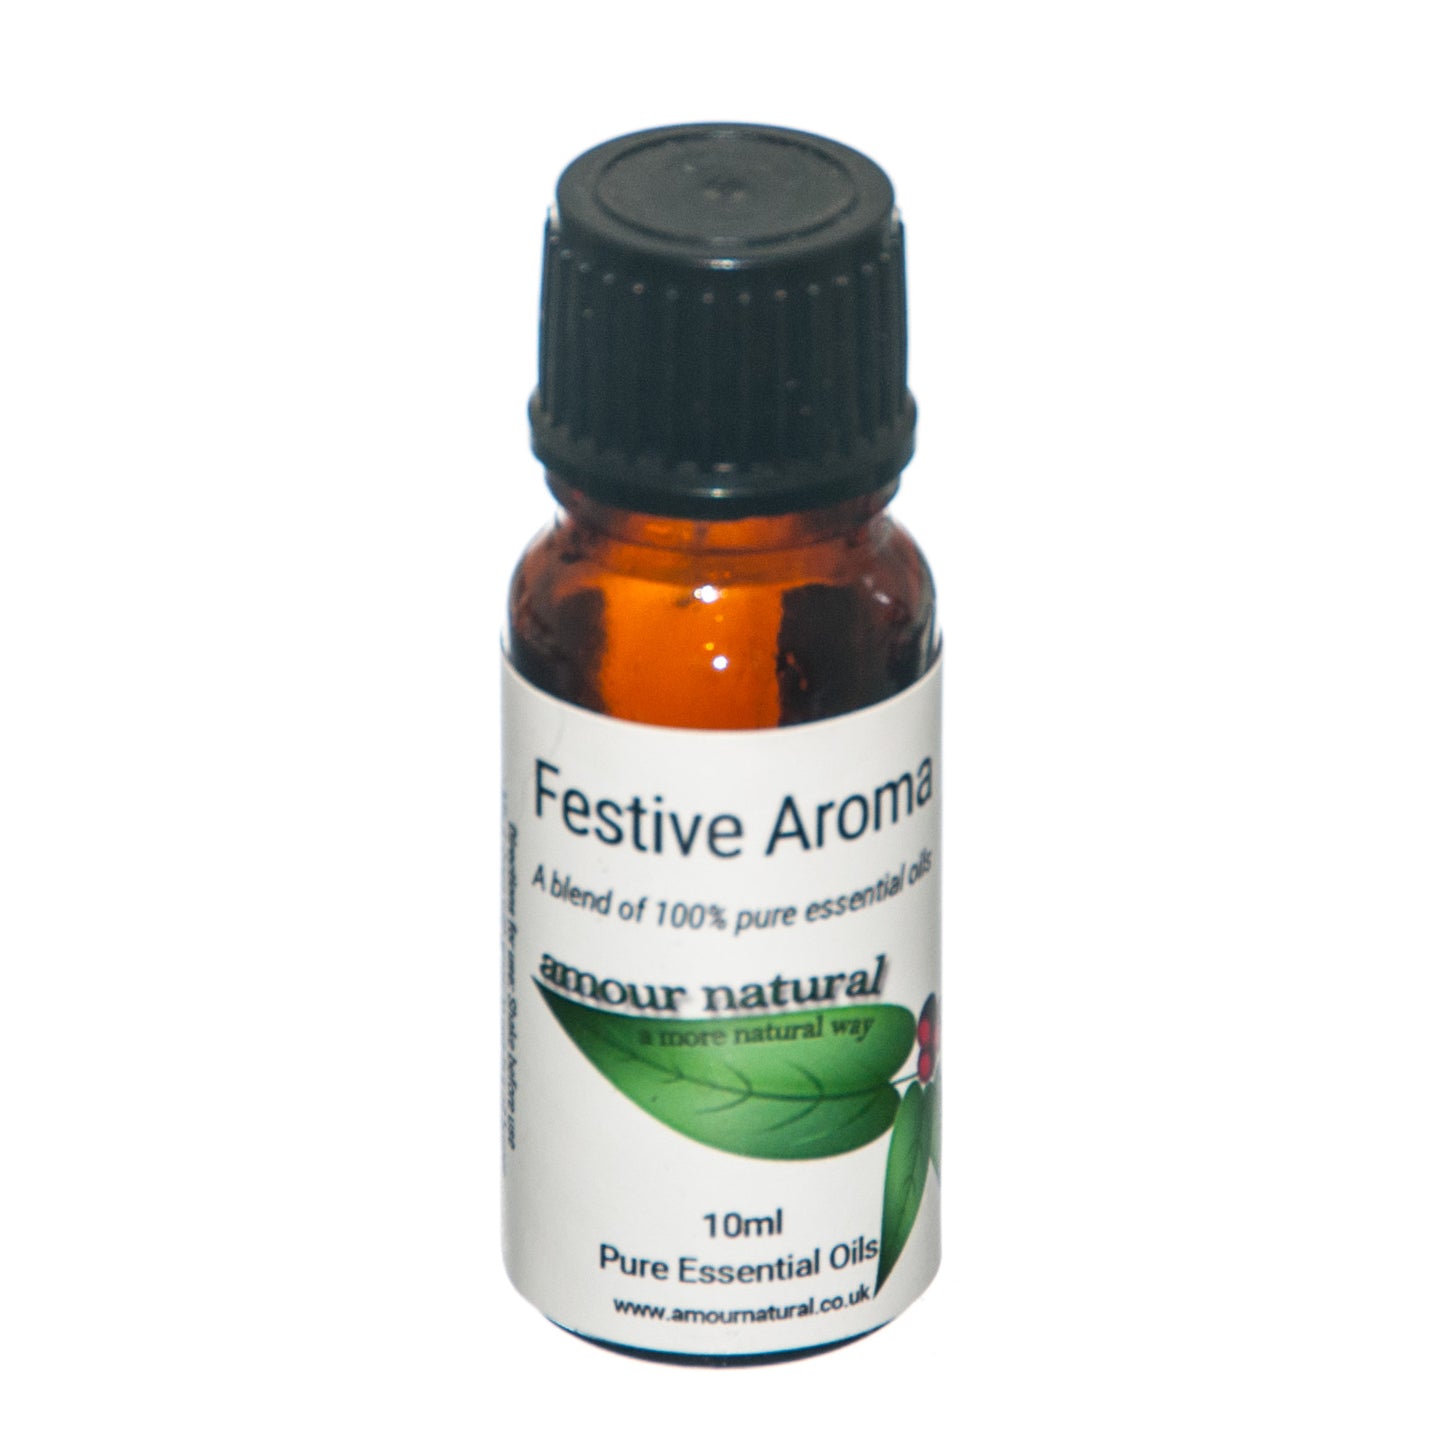 Festive Aroma - Essential Oil